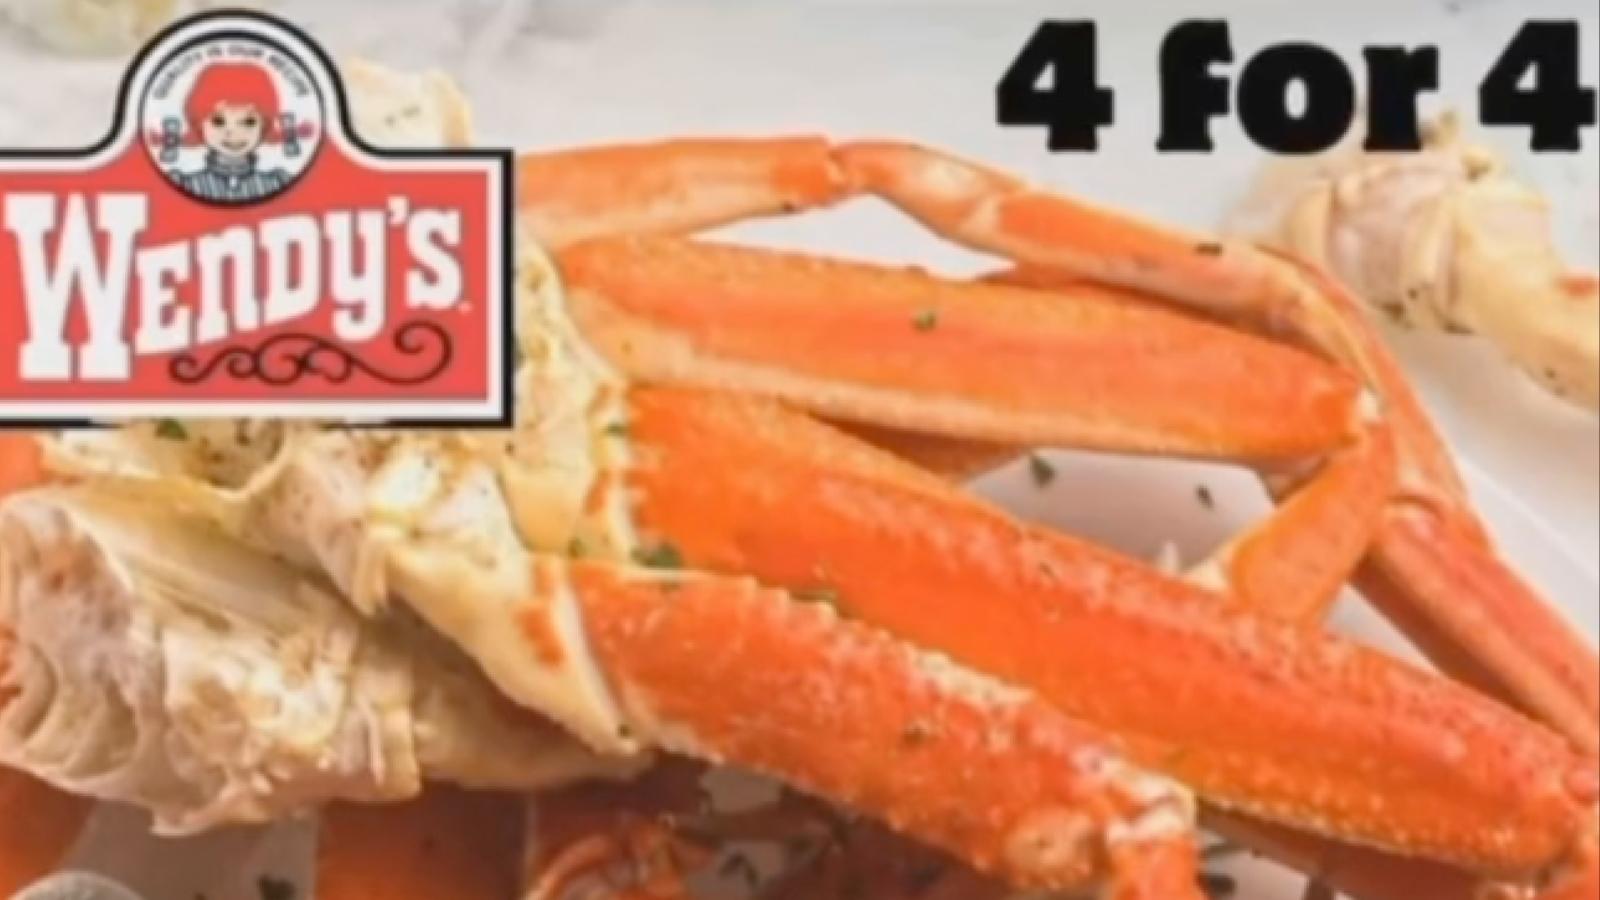 Wendy's Crab Legs